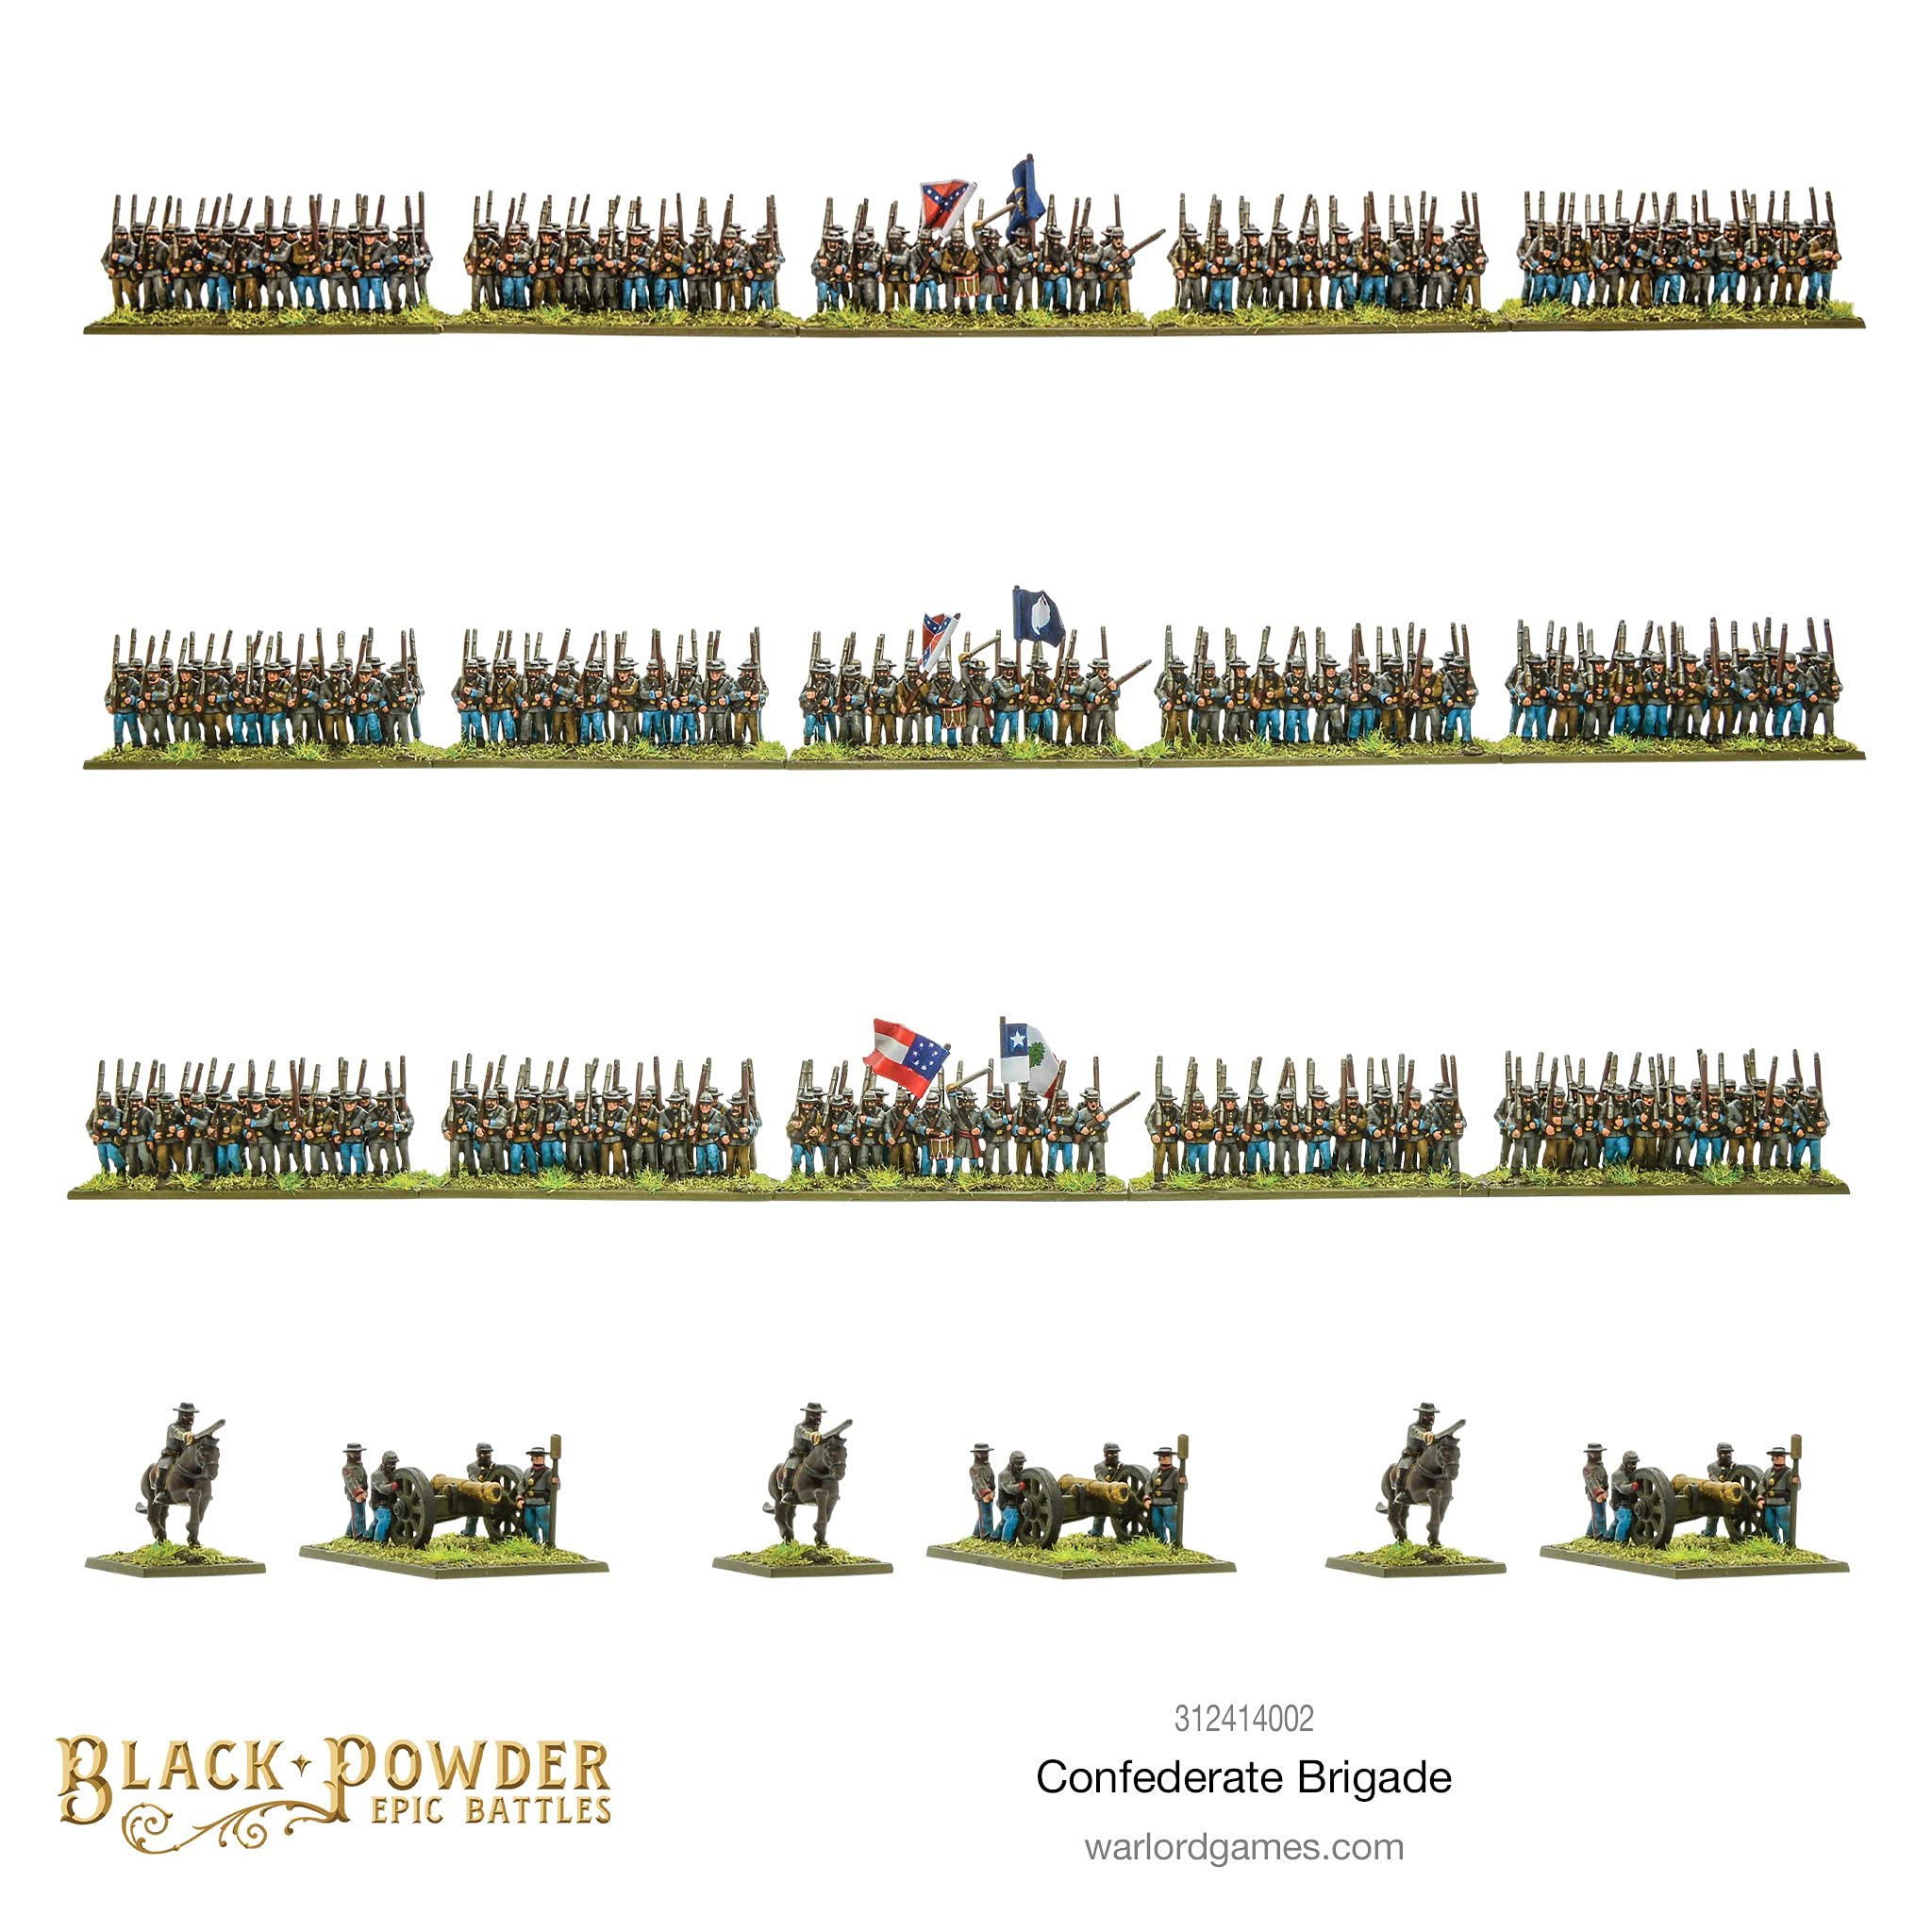 Warlord Black Powder Epic Battles American Civil War Confederate Brigade Military Table Top Wargaming Plastic Model Kit 312414002